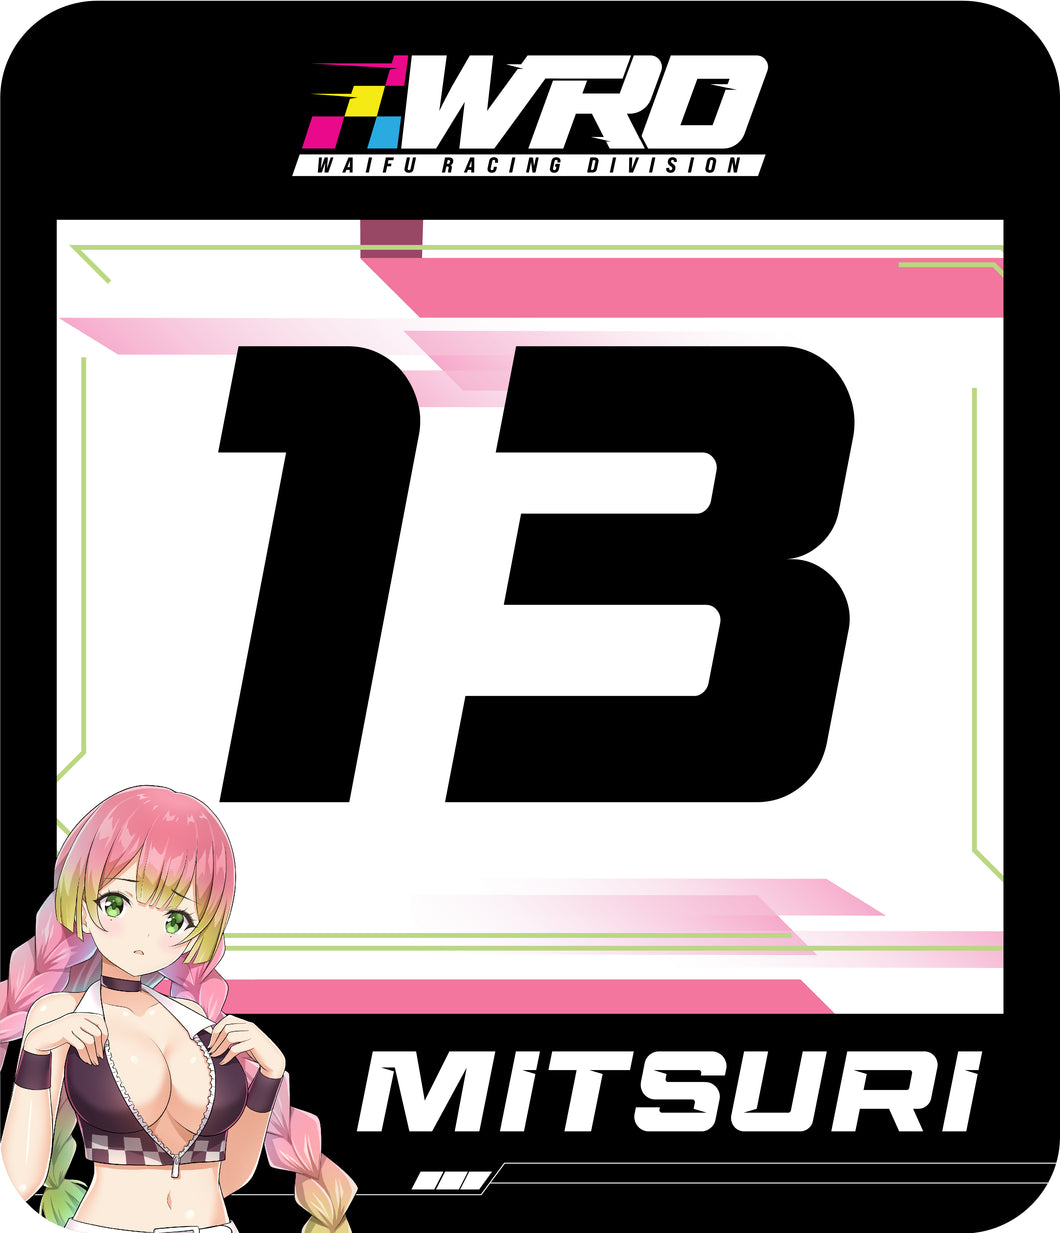 Mitsuri Track Number